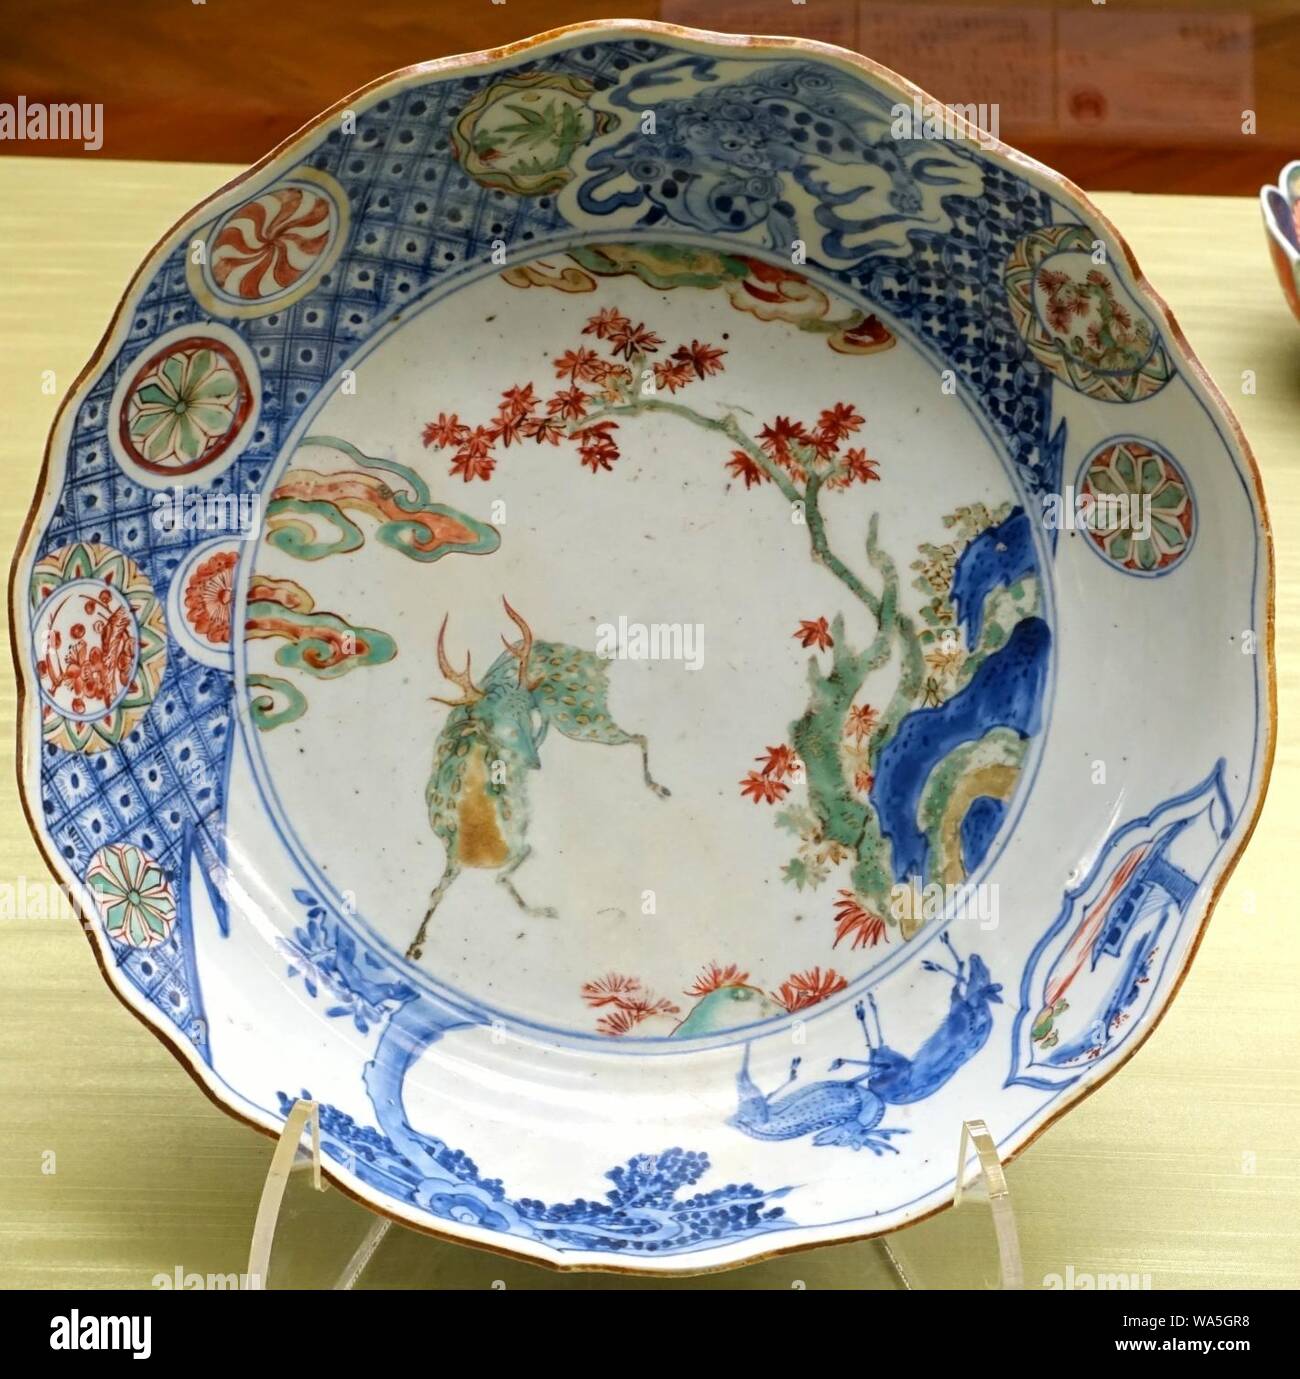 Dish with landscape and deer design, Imari ware, Japan, Edo period, 1600s AD, porcelain with overglaze enamel Stock Photo